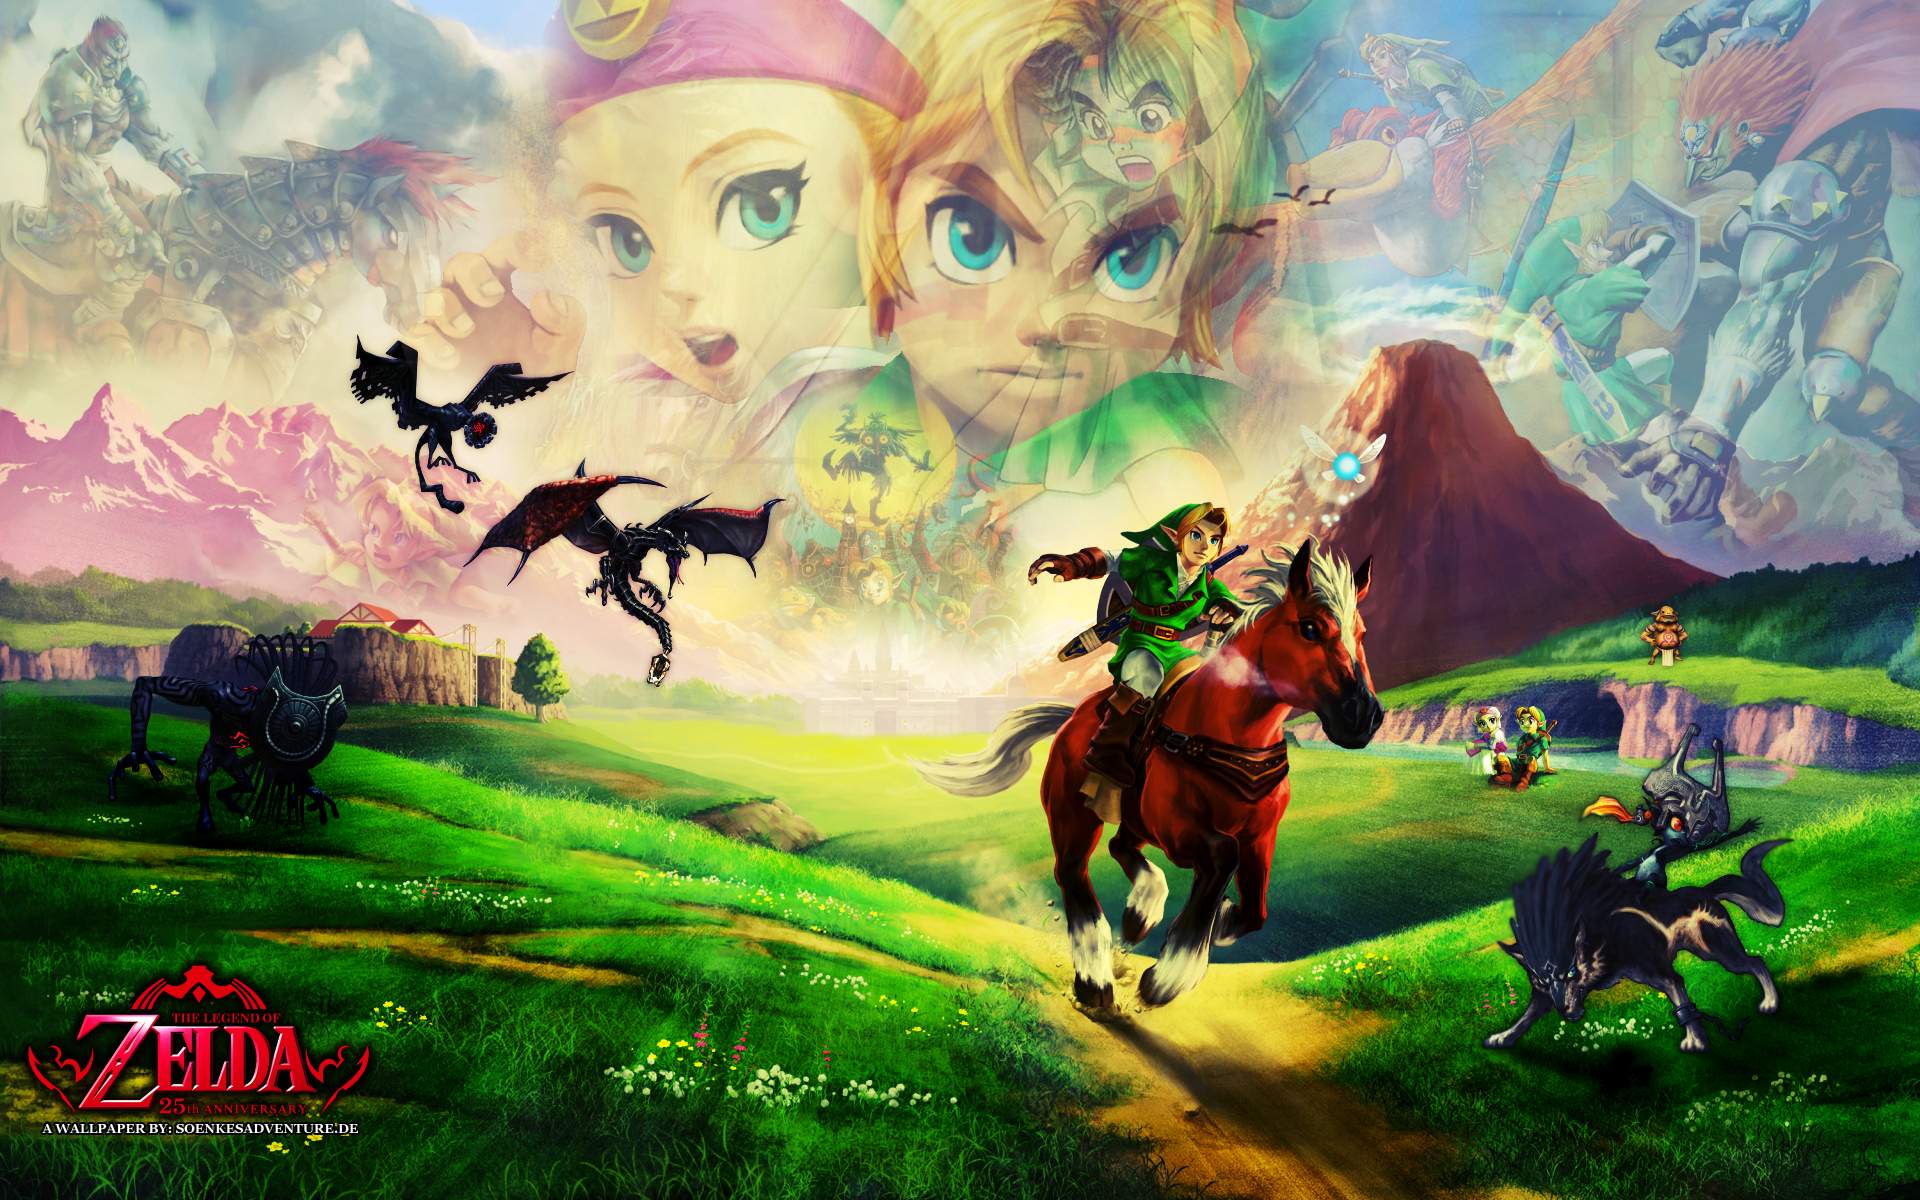 Zelda Wallpaper HD. Wallpaper, Background, Image, Art Photo